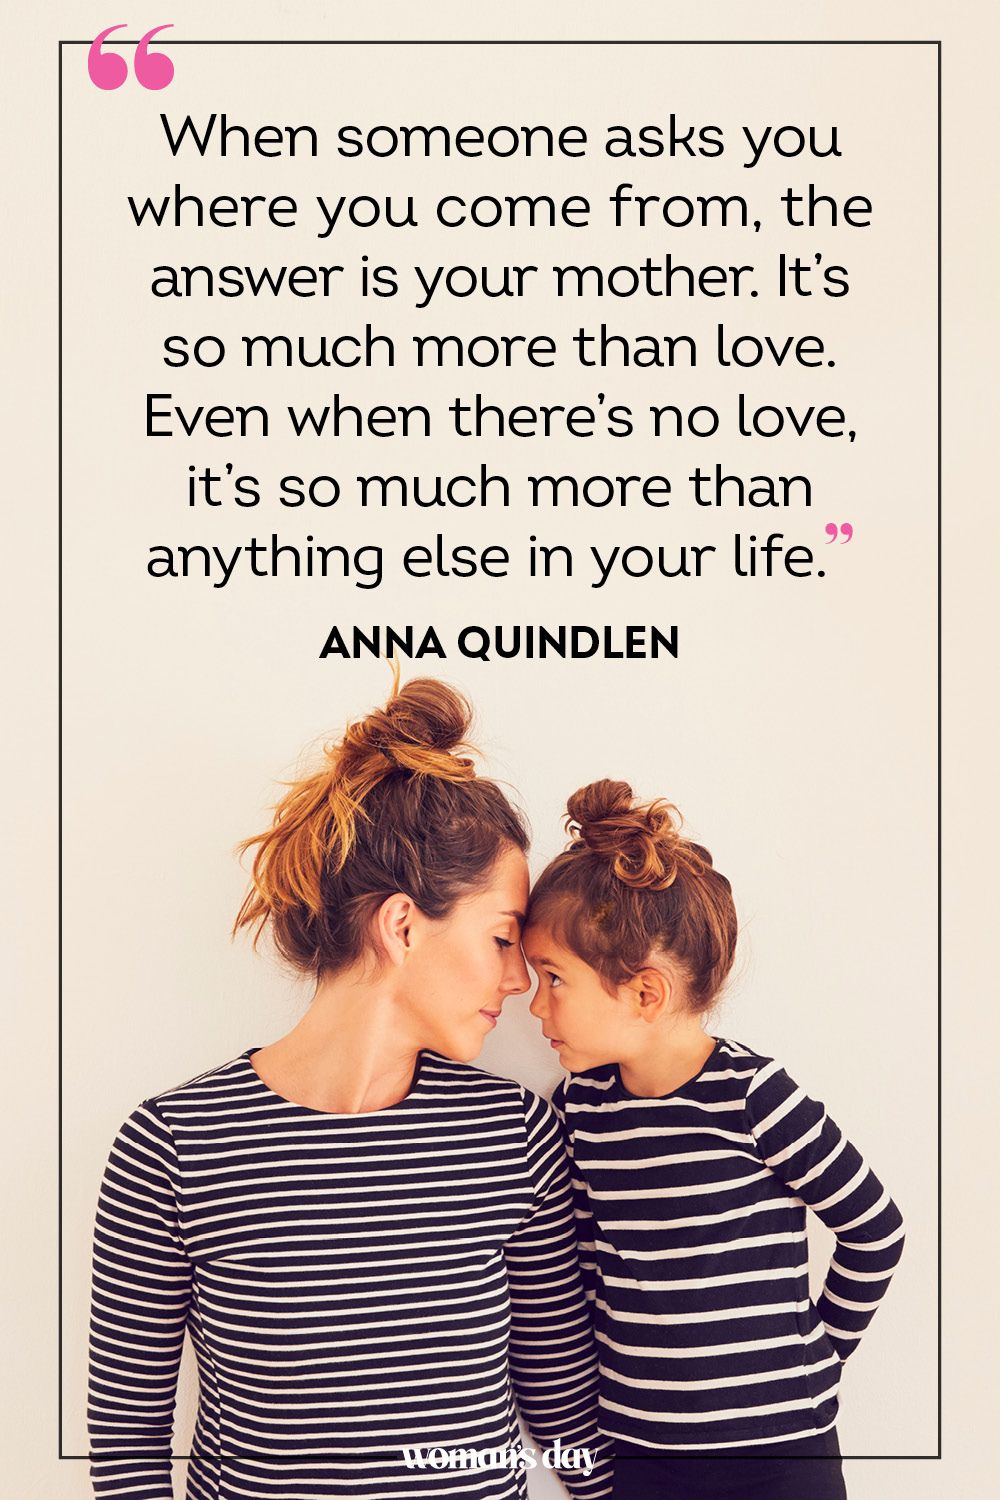 Mom vs daughter